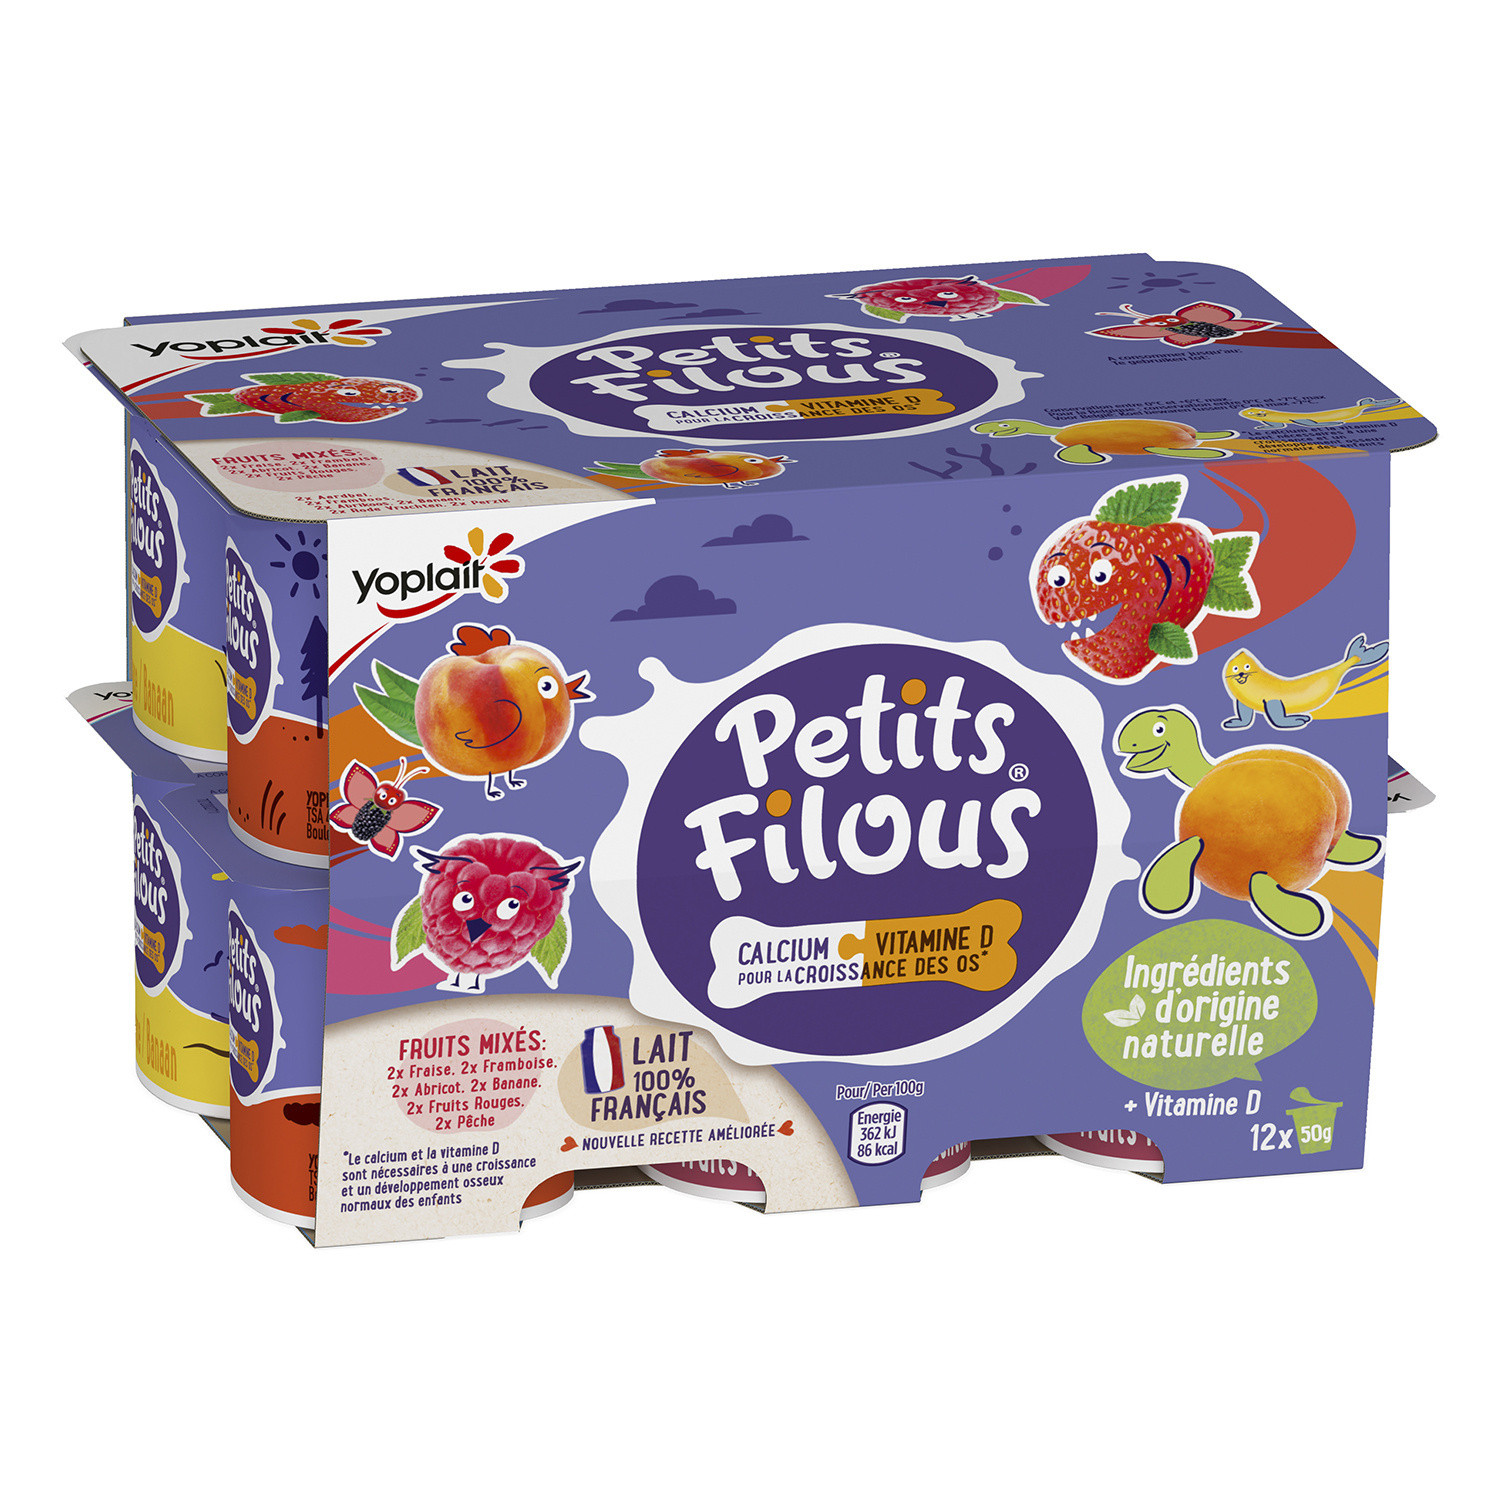 Yoplait Petit Filous fruits variety 12x50g